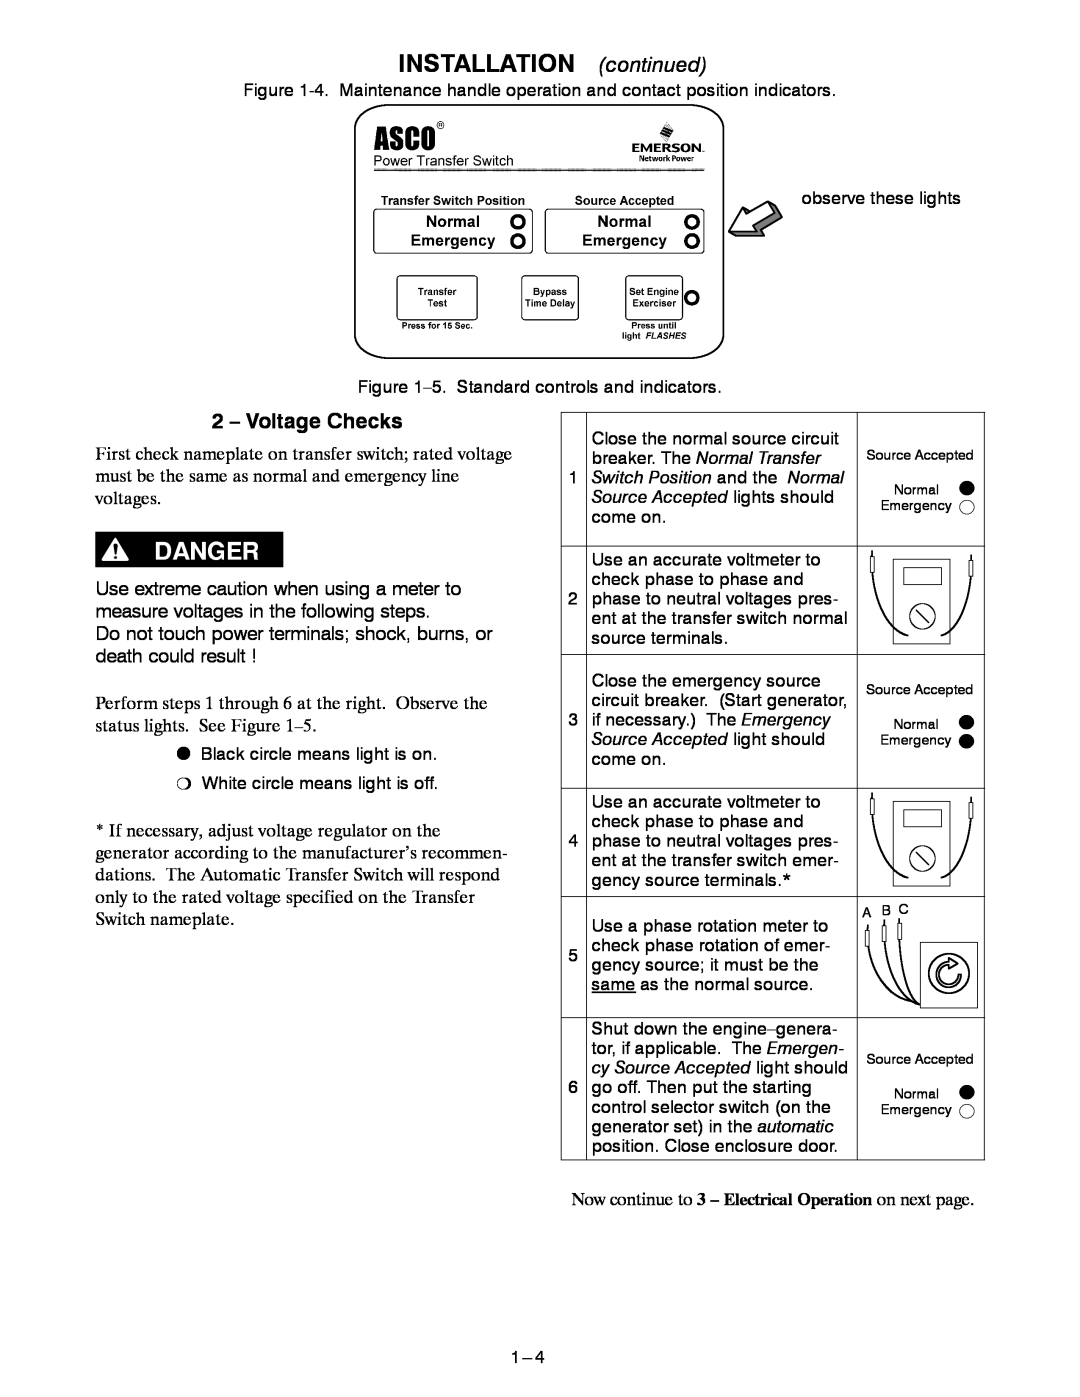 Emerson 300 manual INSTALLATION continued, Voltage Checks 